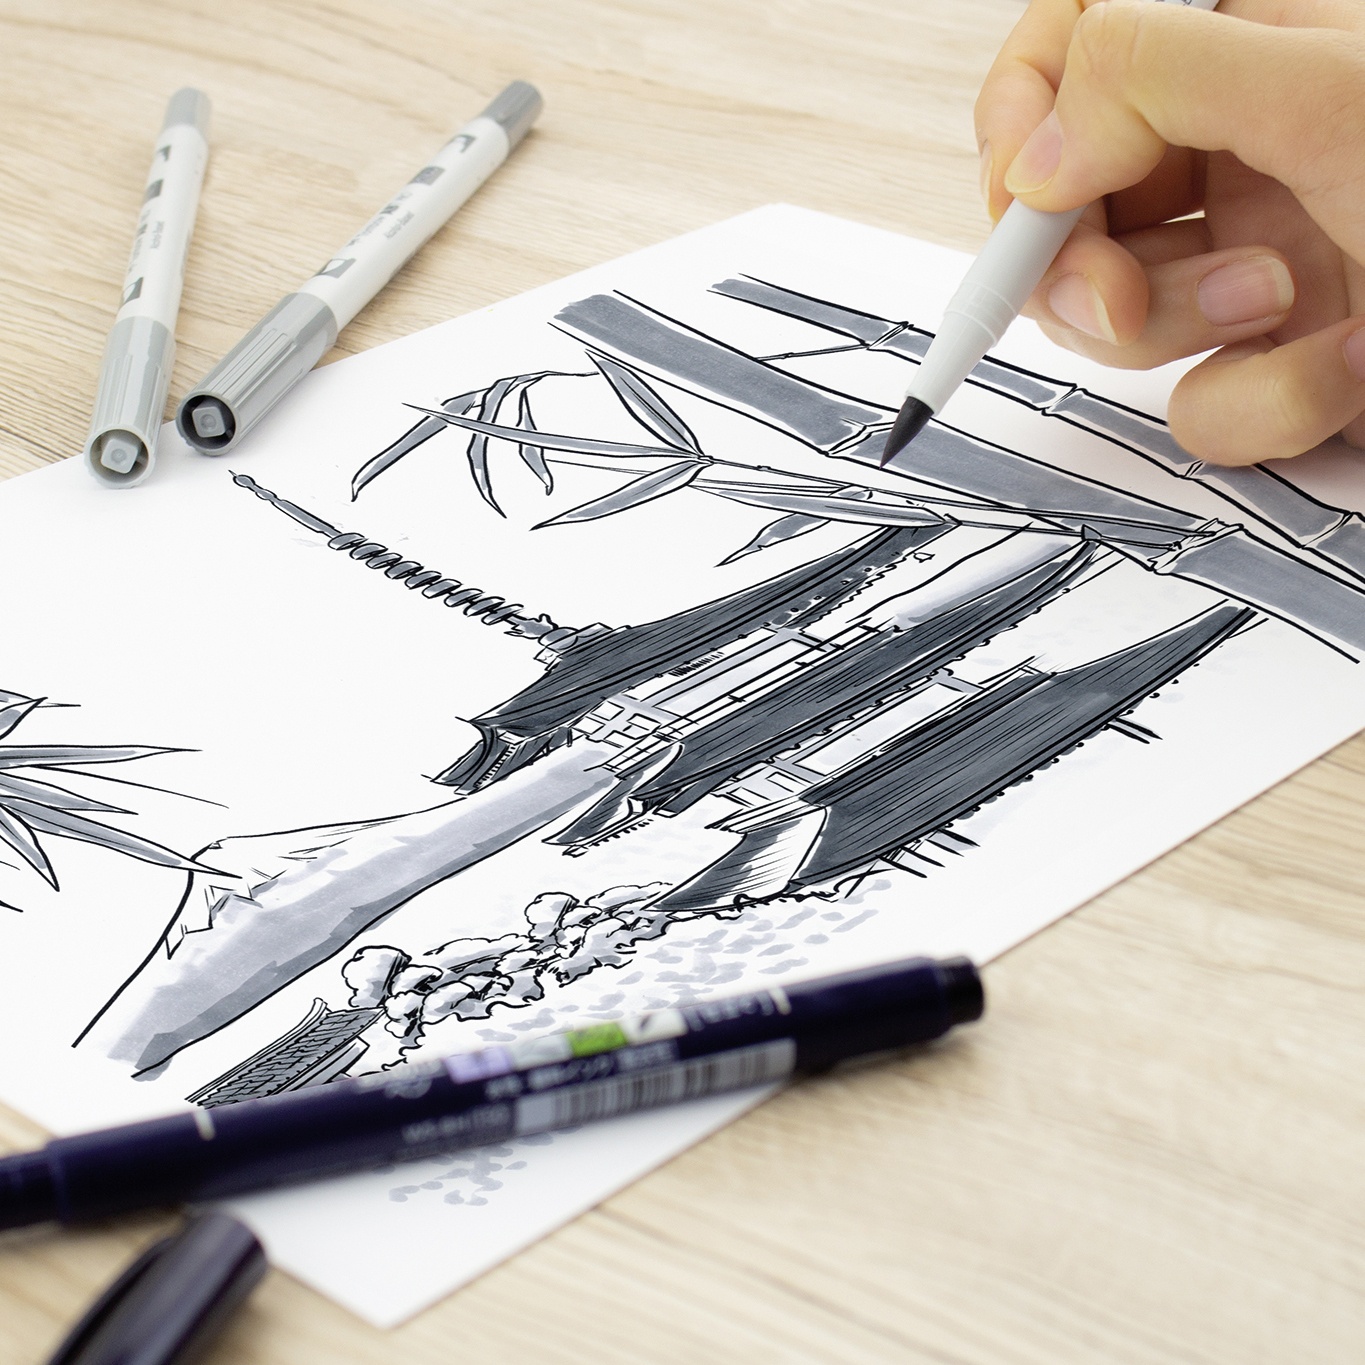 ABT PRO Dual Brush Pen 5er-Set Cold Grey in der Gruppe Stifte / Künstlerstifte / Marker bei Pen Store (101259)